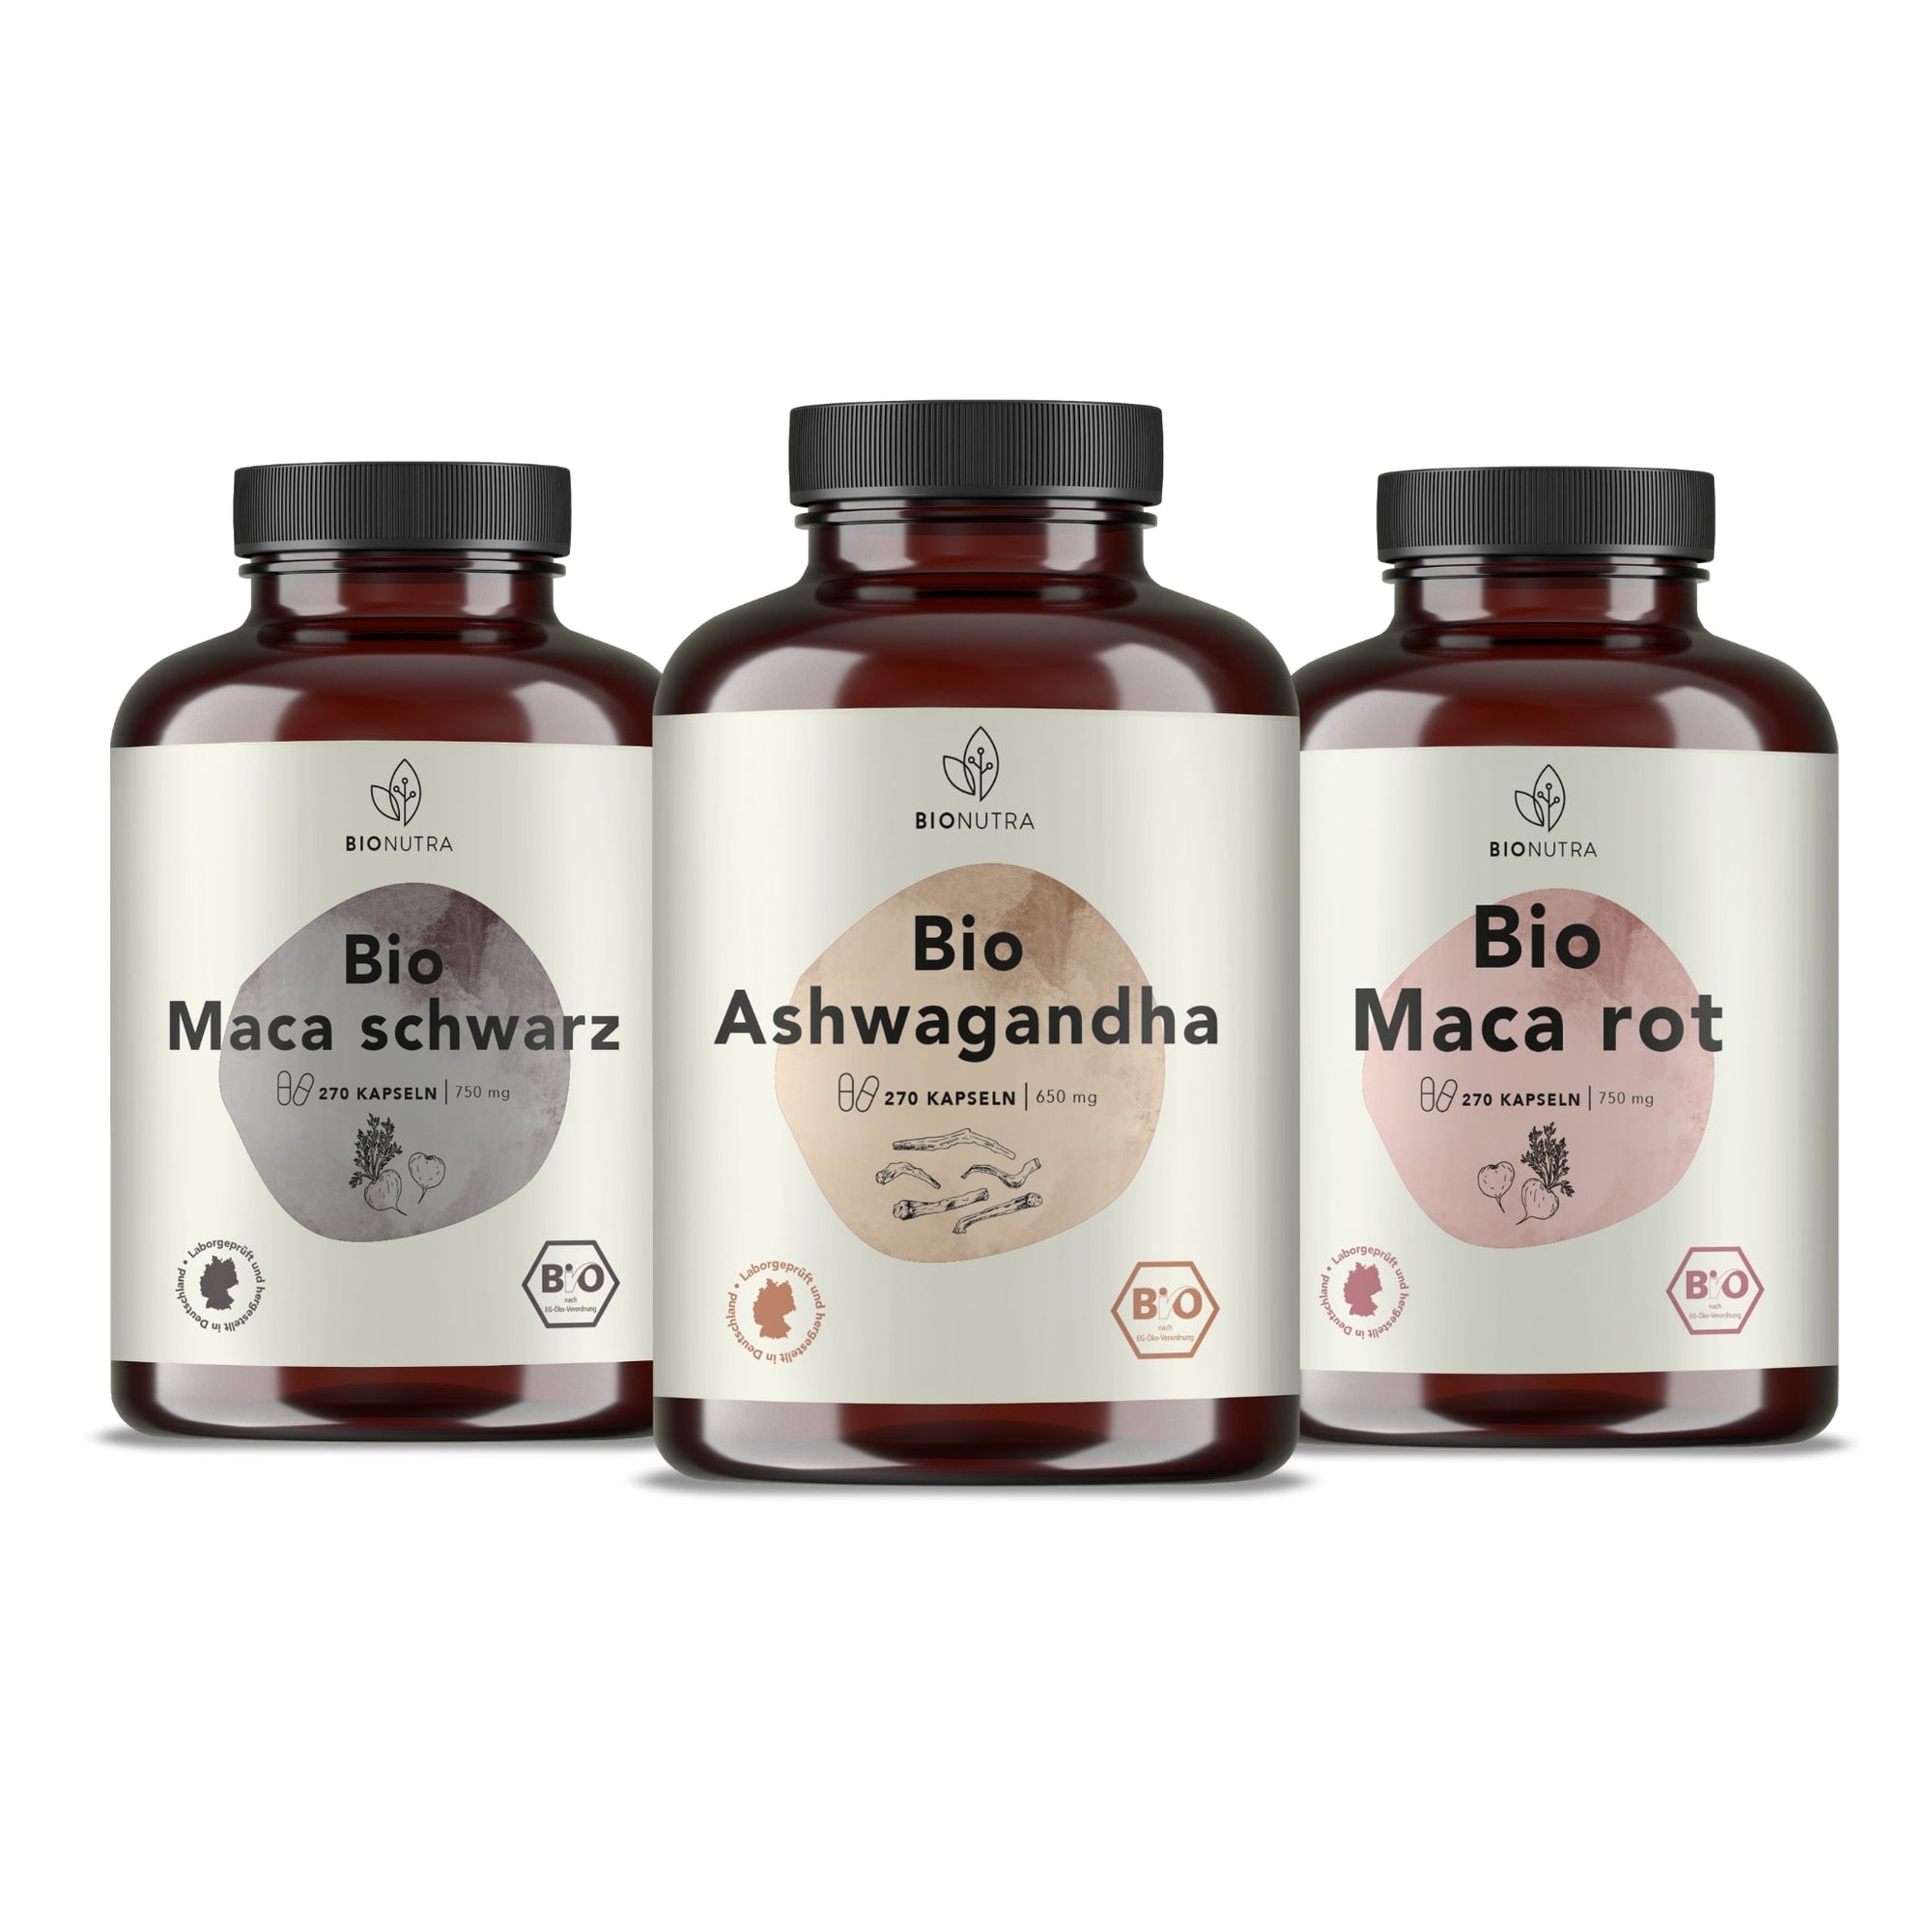 Bionutra Die Kraft der Wurzeln enhält Bio Maca schwarz Kapseln, Bio Ashwagndha Kapseln, Bio Maca rot Kapseln